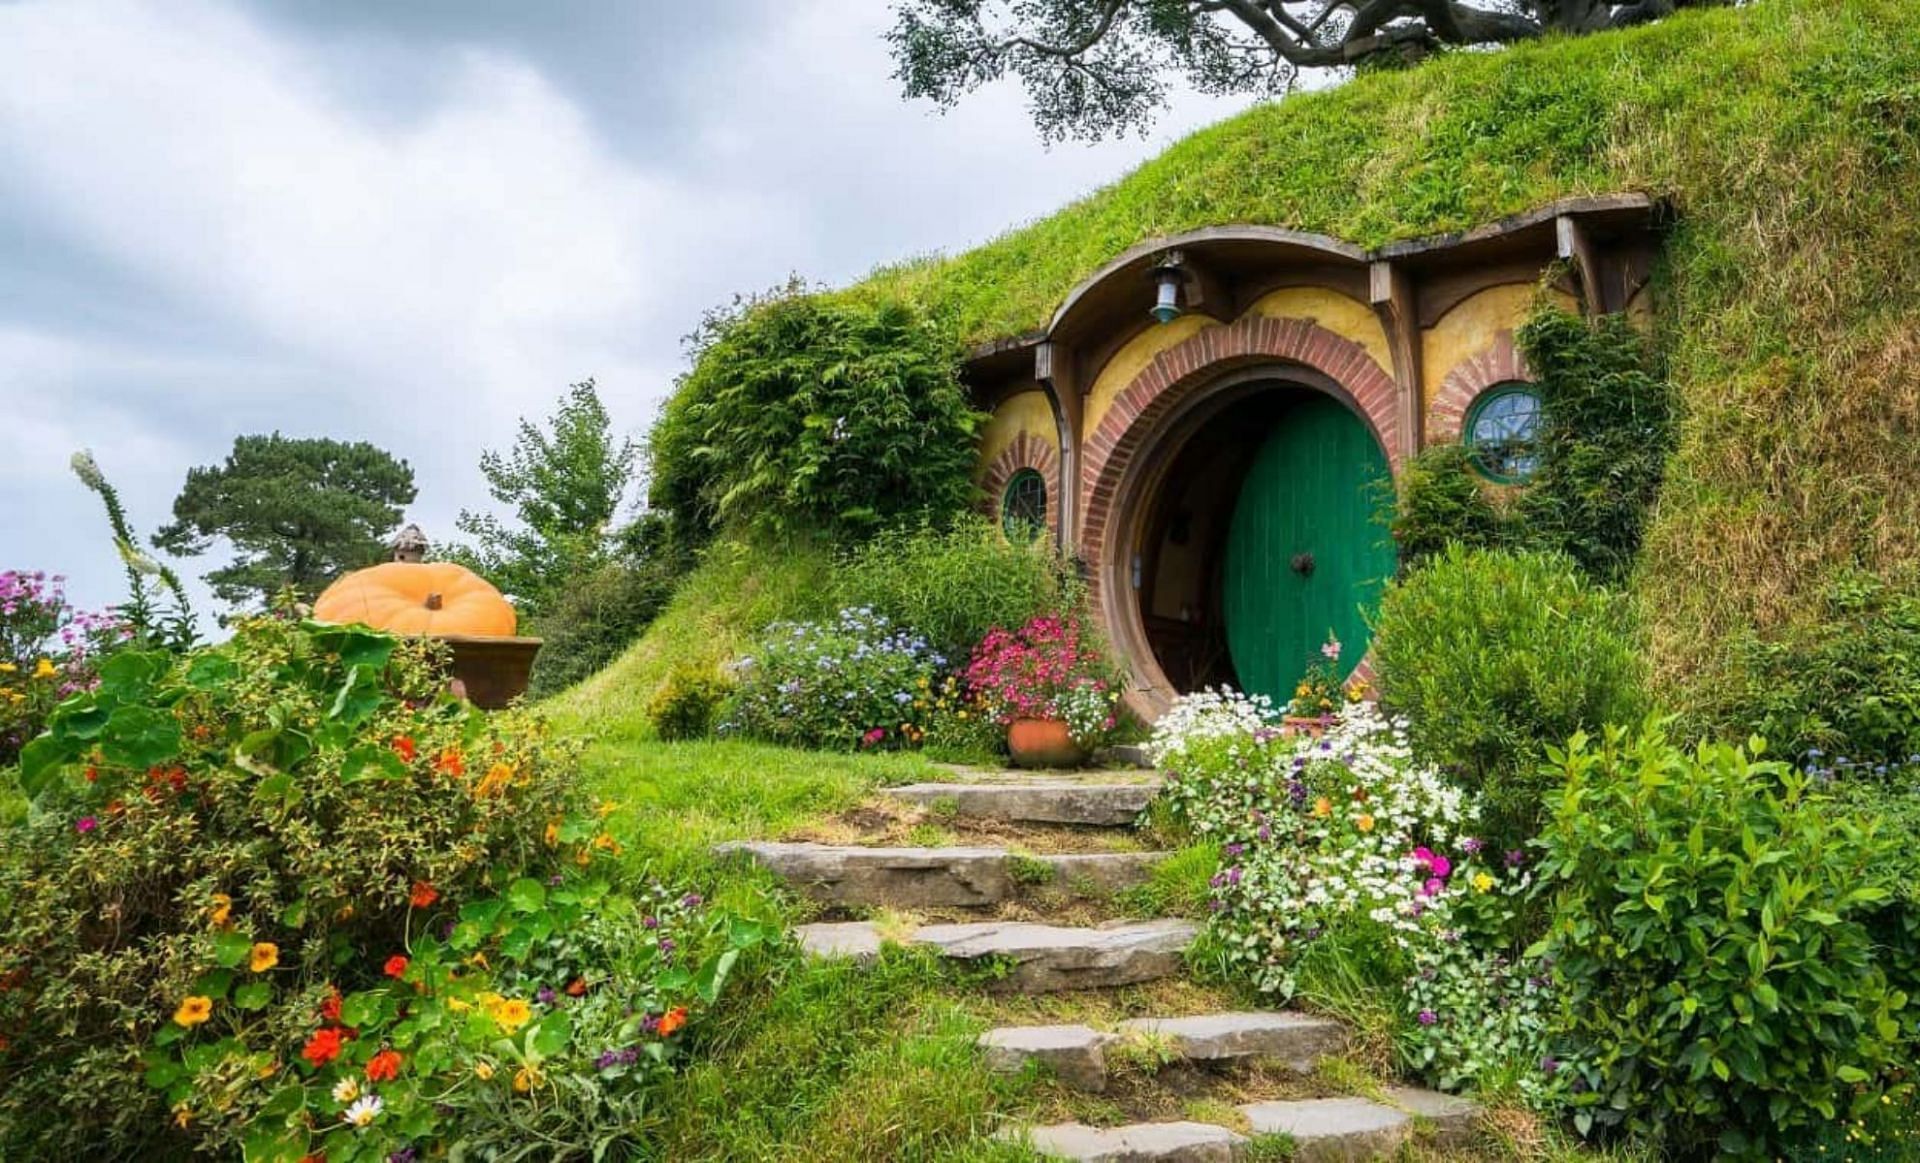 A hobbit house (Image via Blue Planet Studio/Shutterstock)